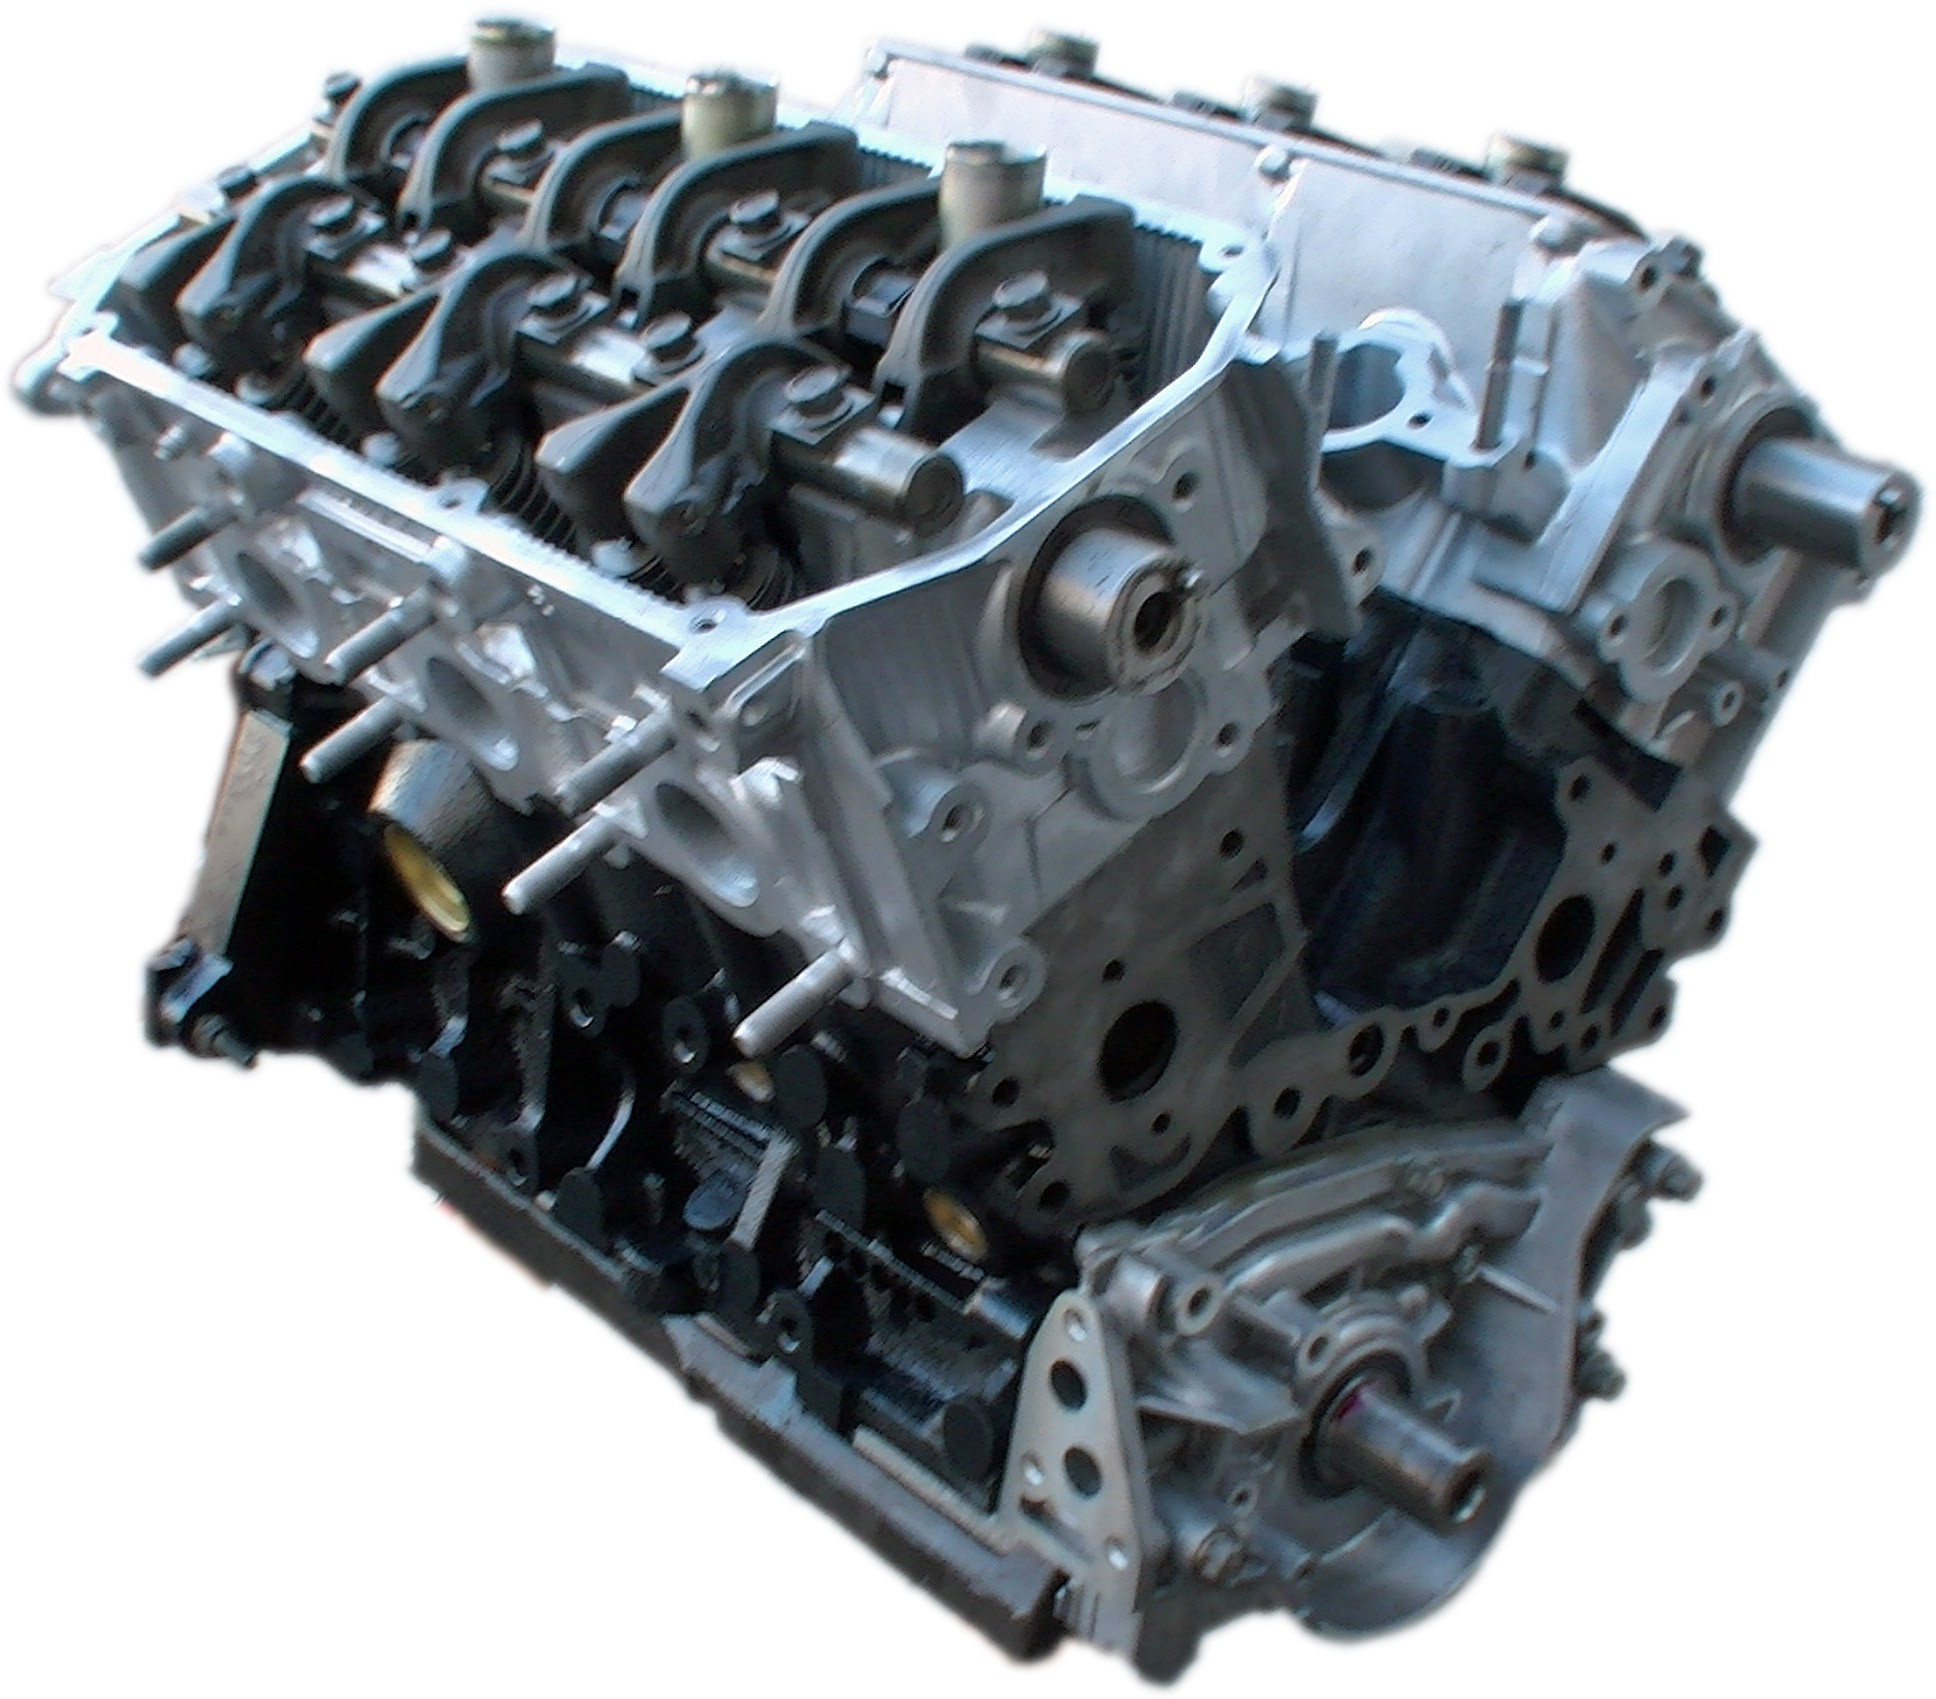 » Rebuilt 01-02 Mitsubishi Montero Limited 3.5L 6G74 SOHC Longblock Engine